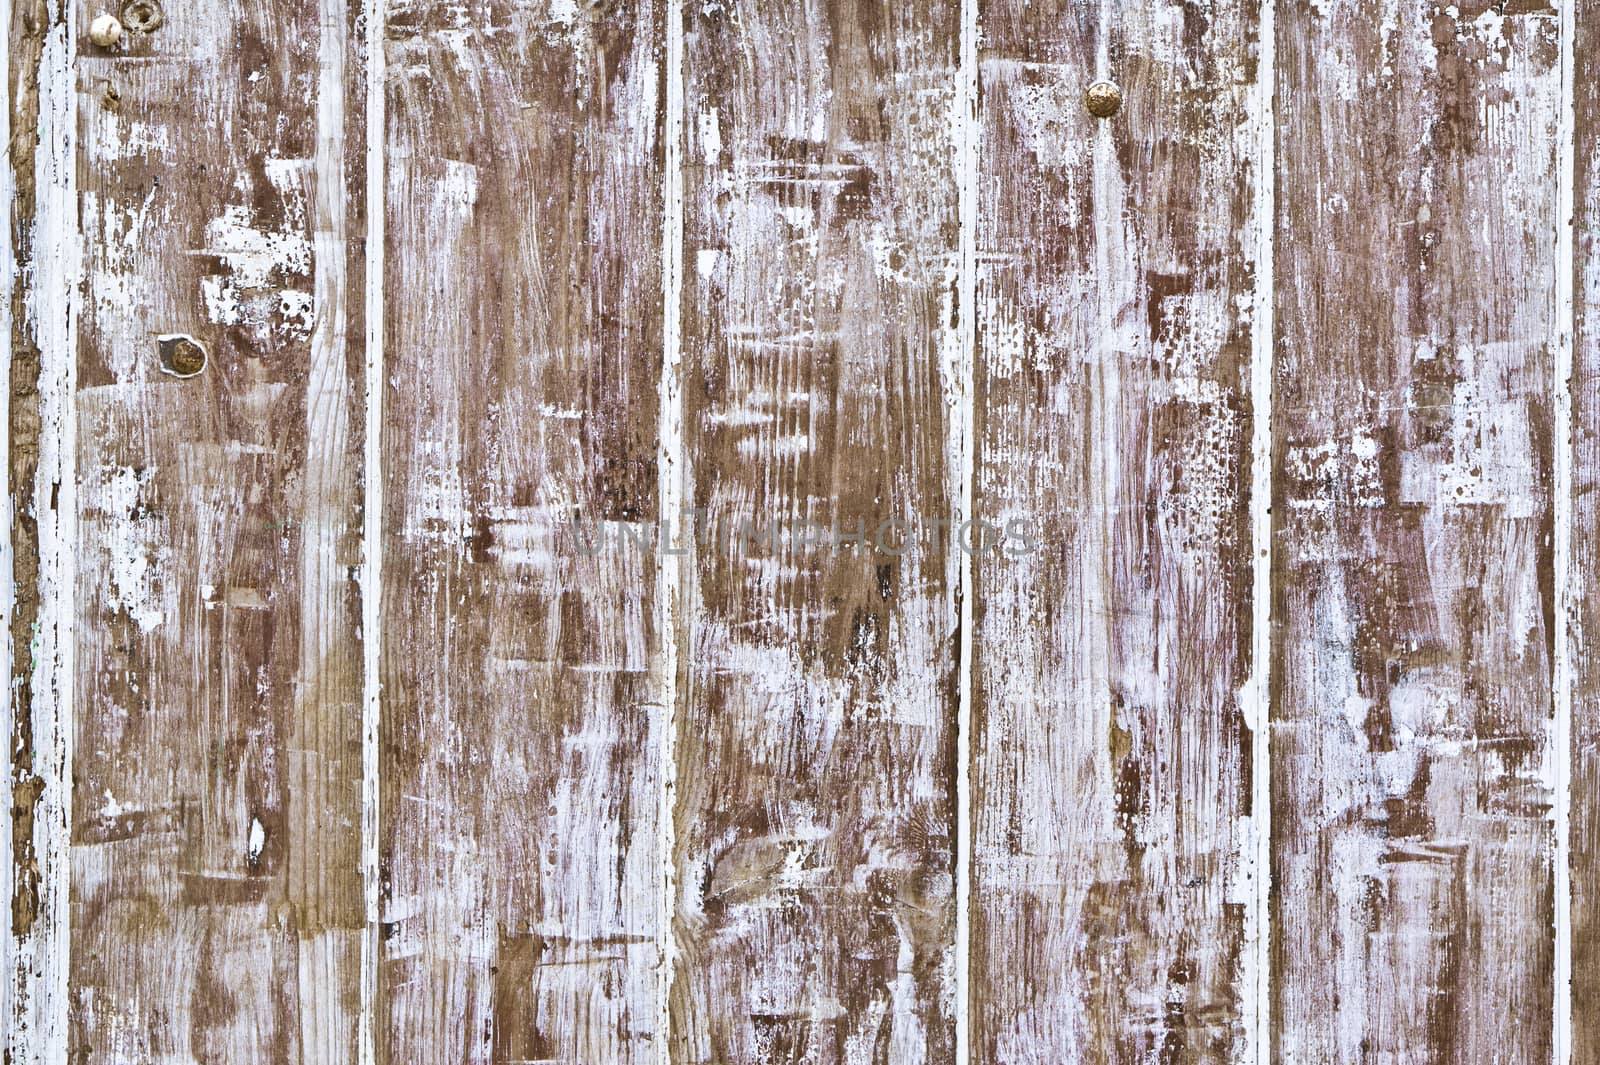 Weathered wood with peeling white paint